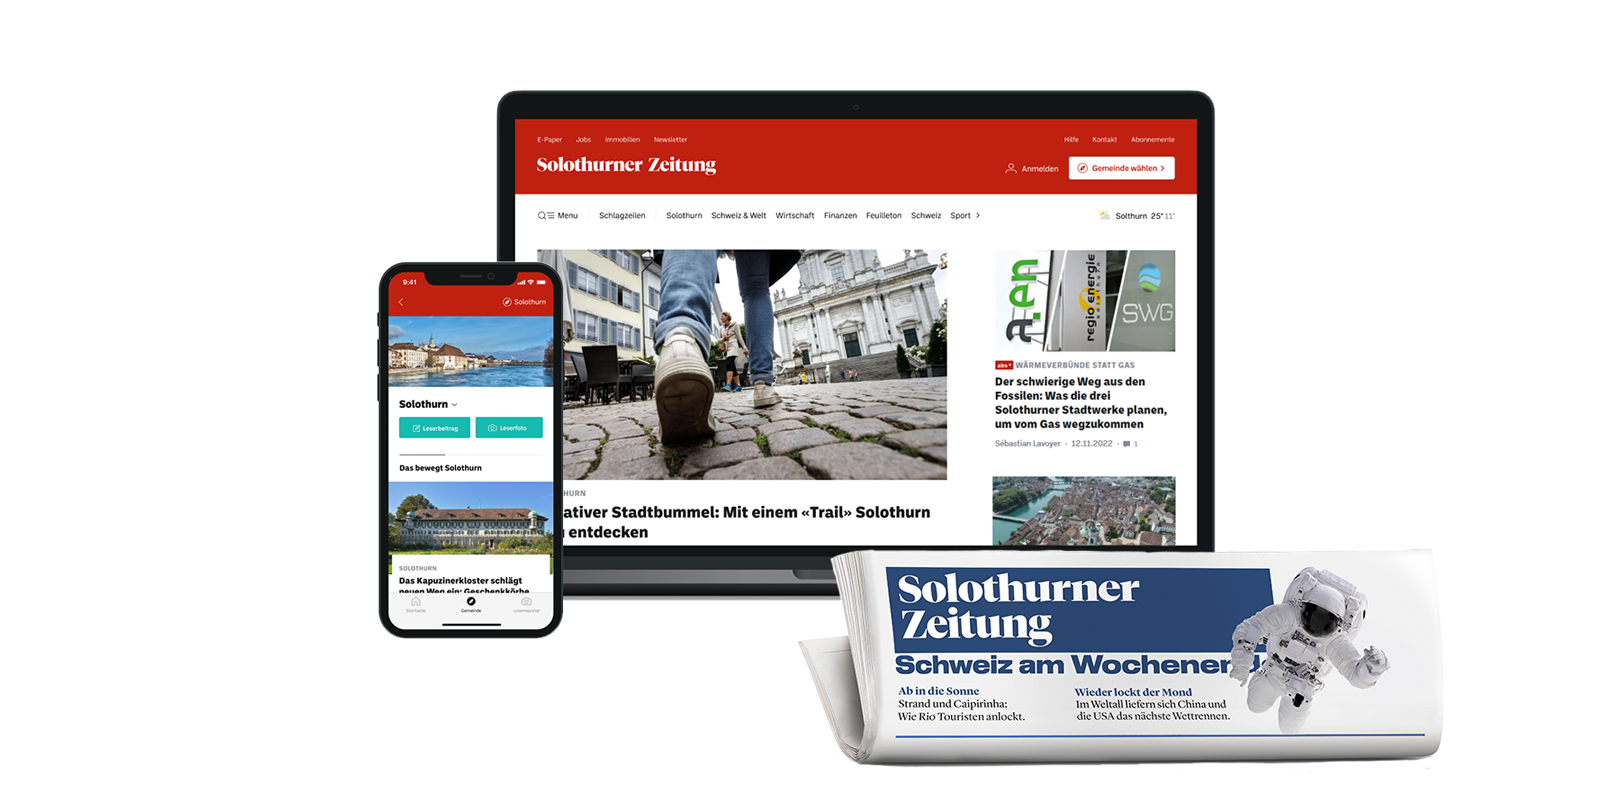 Solothurner Zeitung, solothurnerzeitung.ch